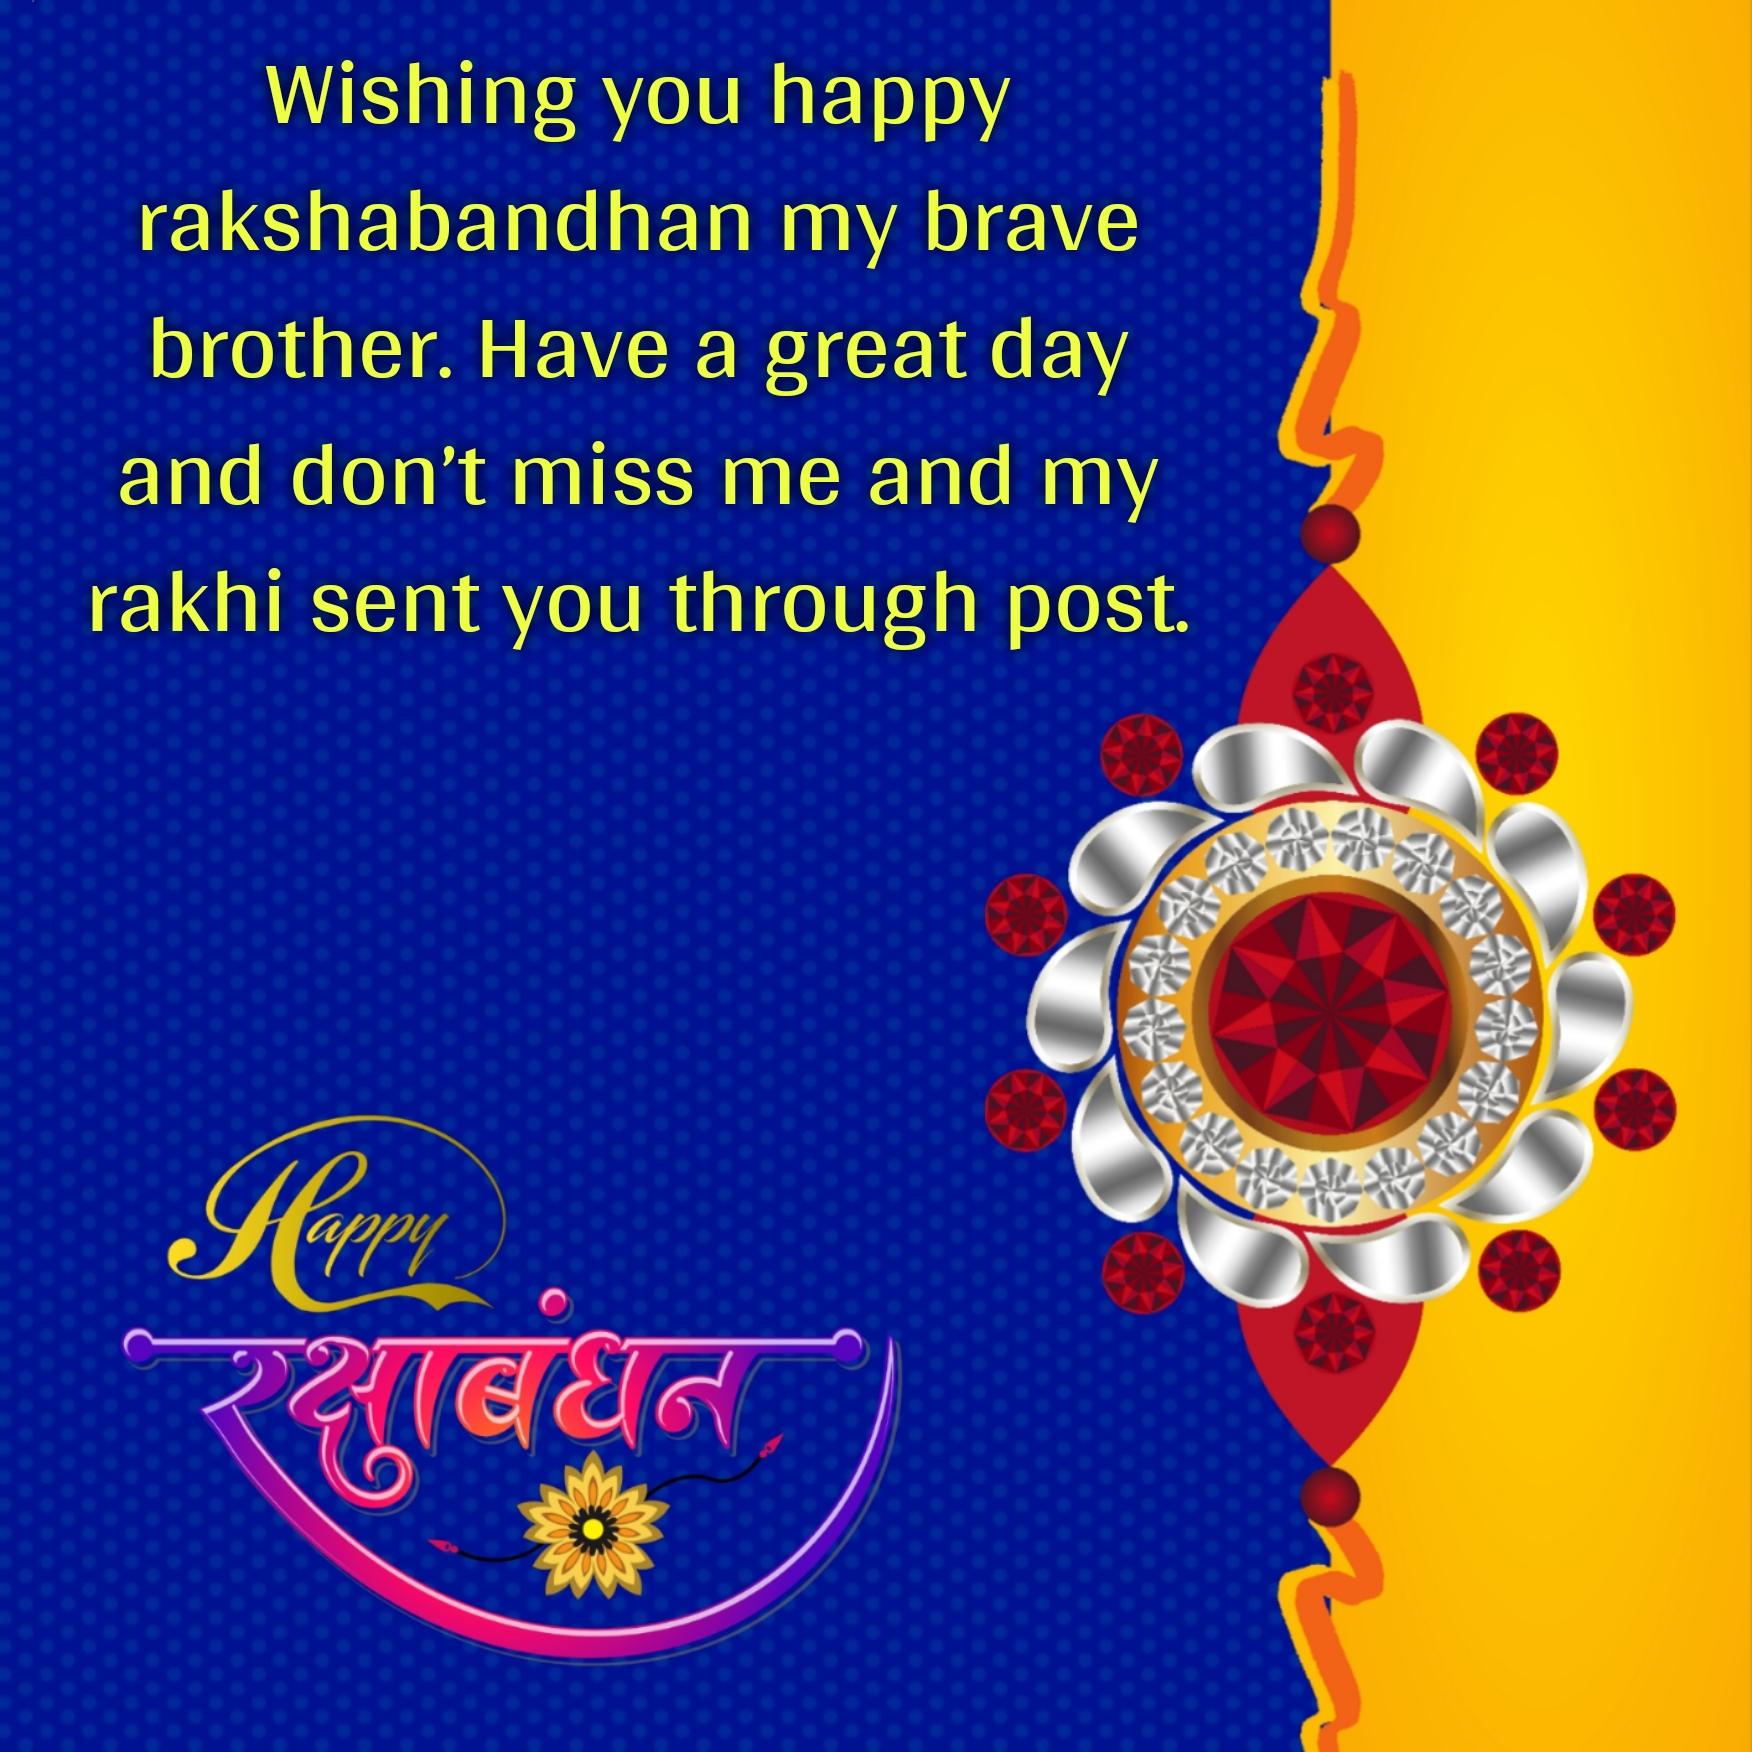 Wishing you happy rakshabandhan my brave brother